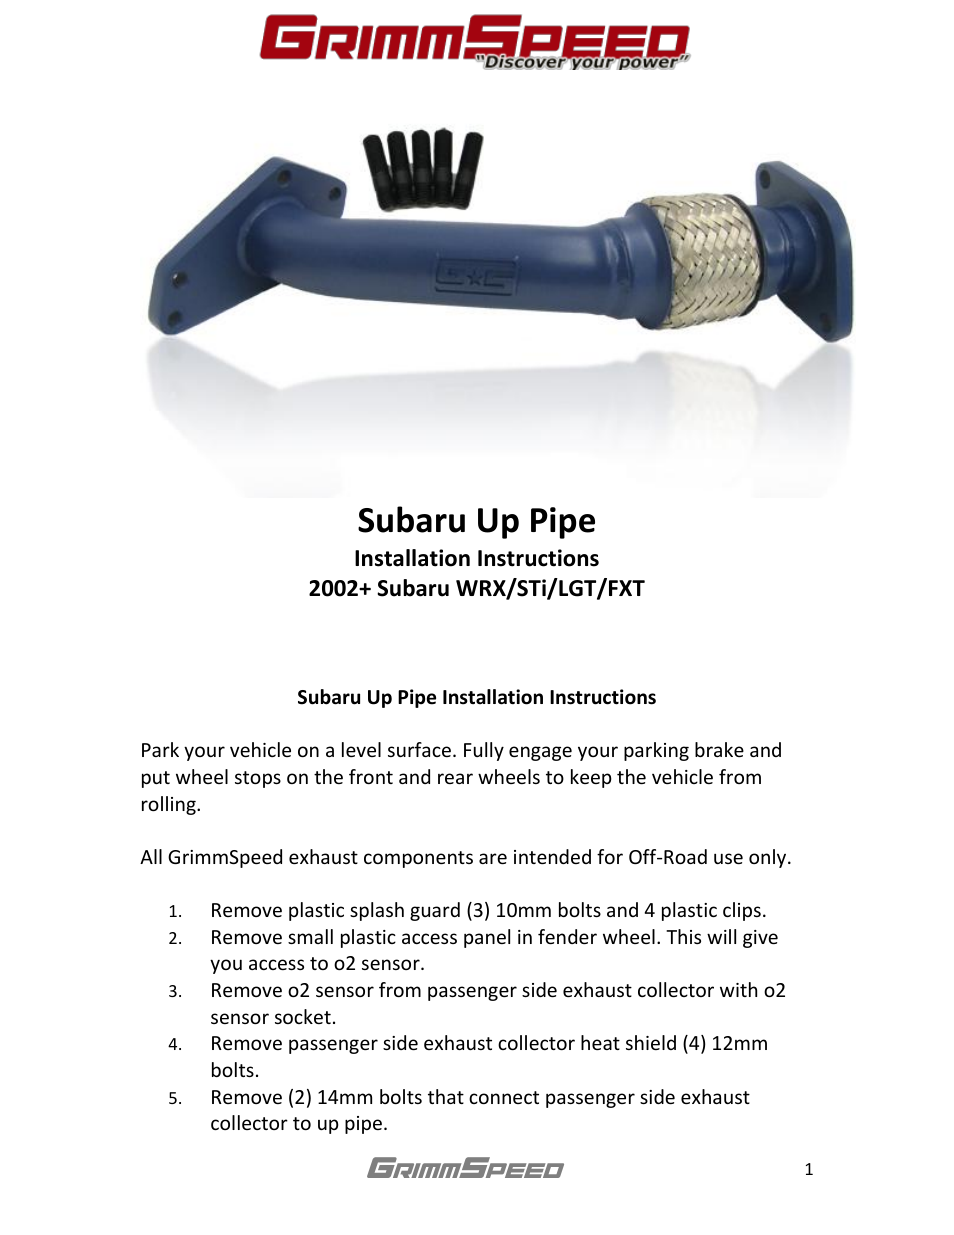 Subaru Up pipe